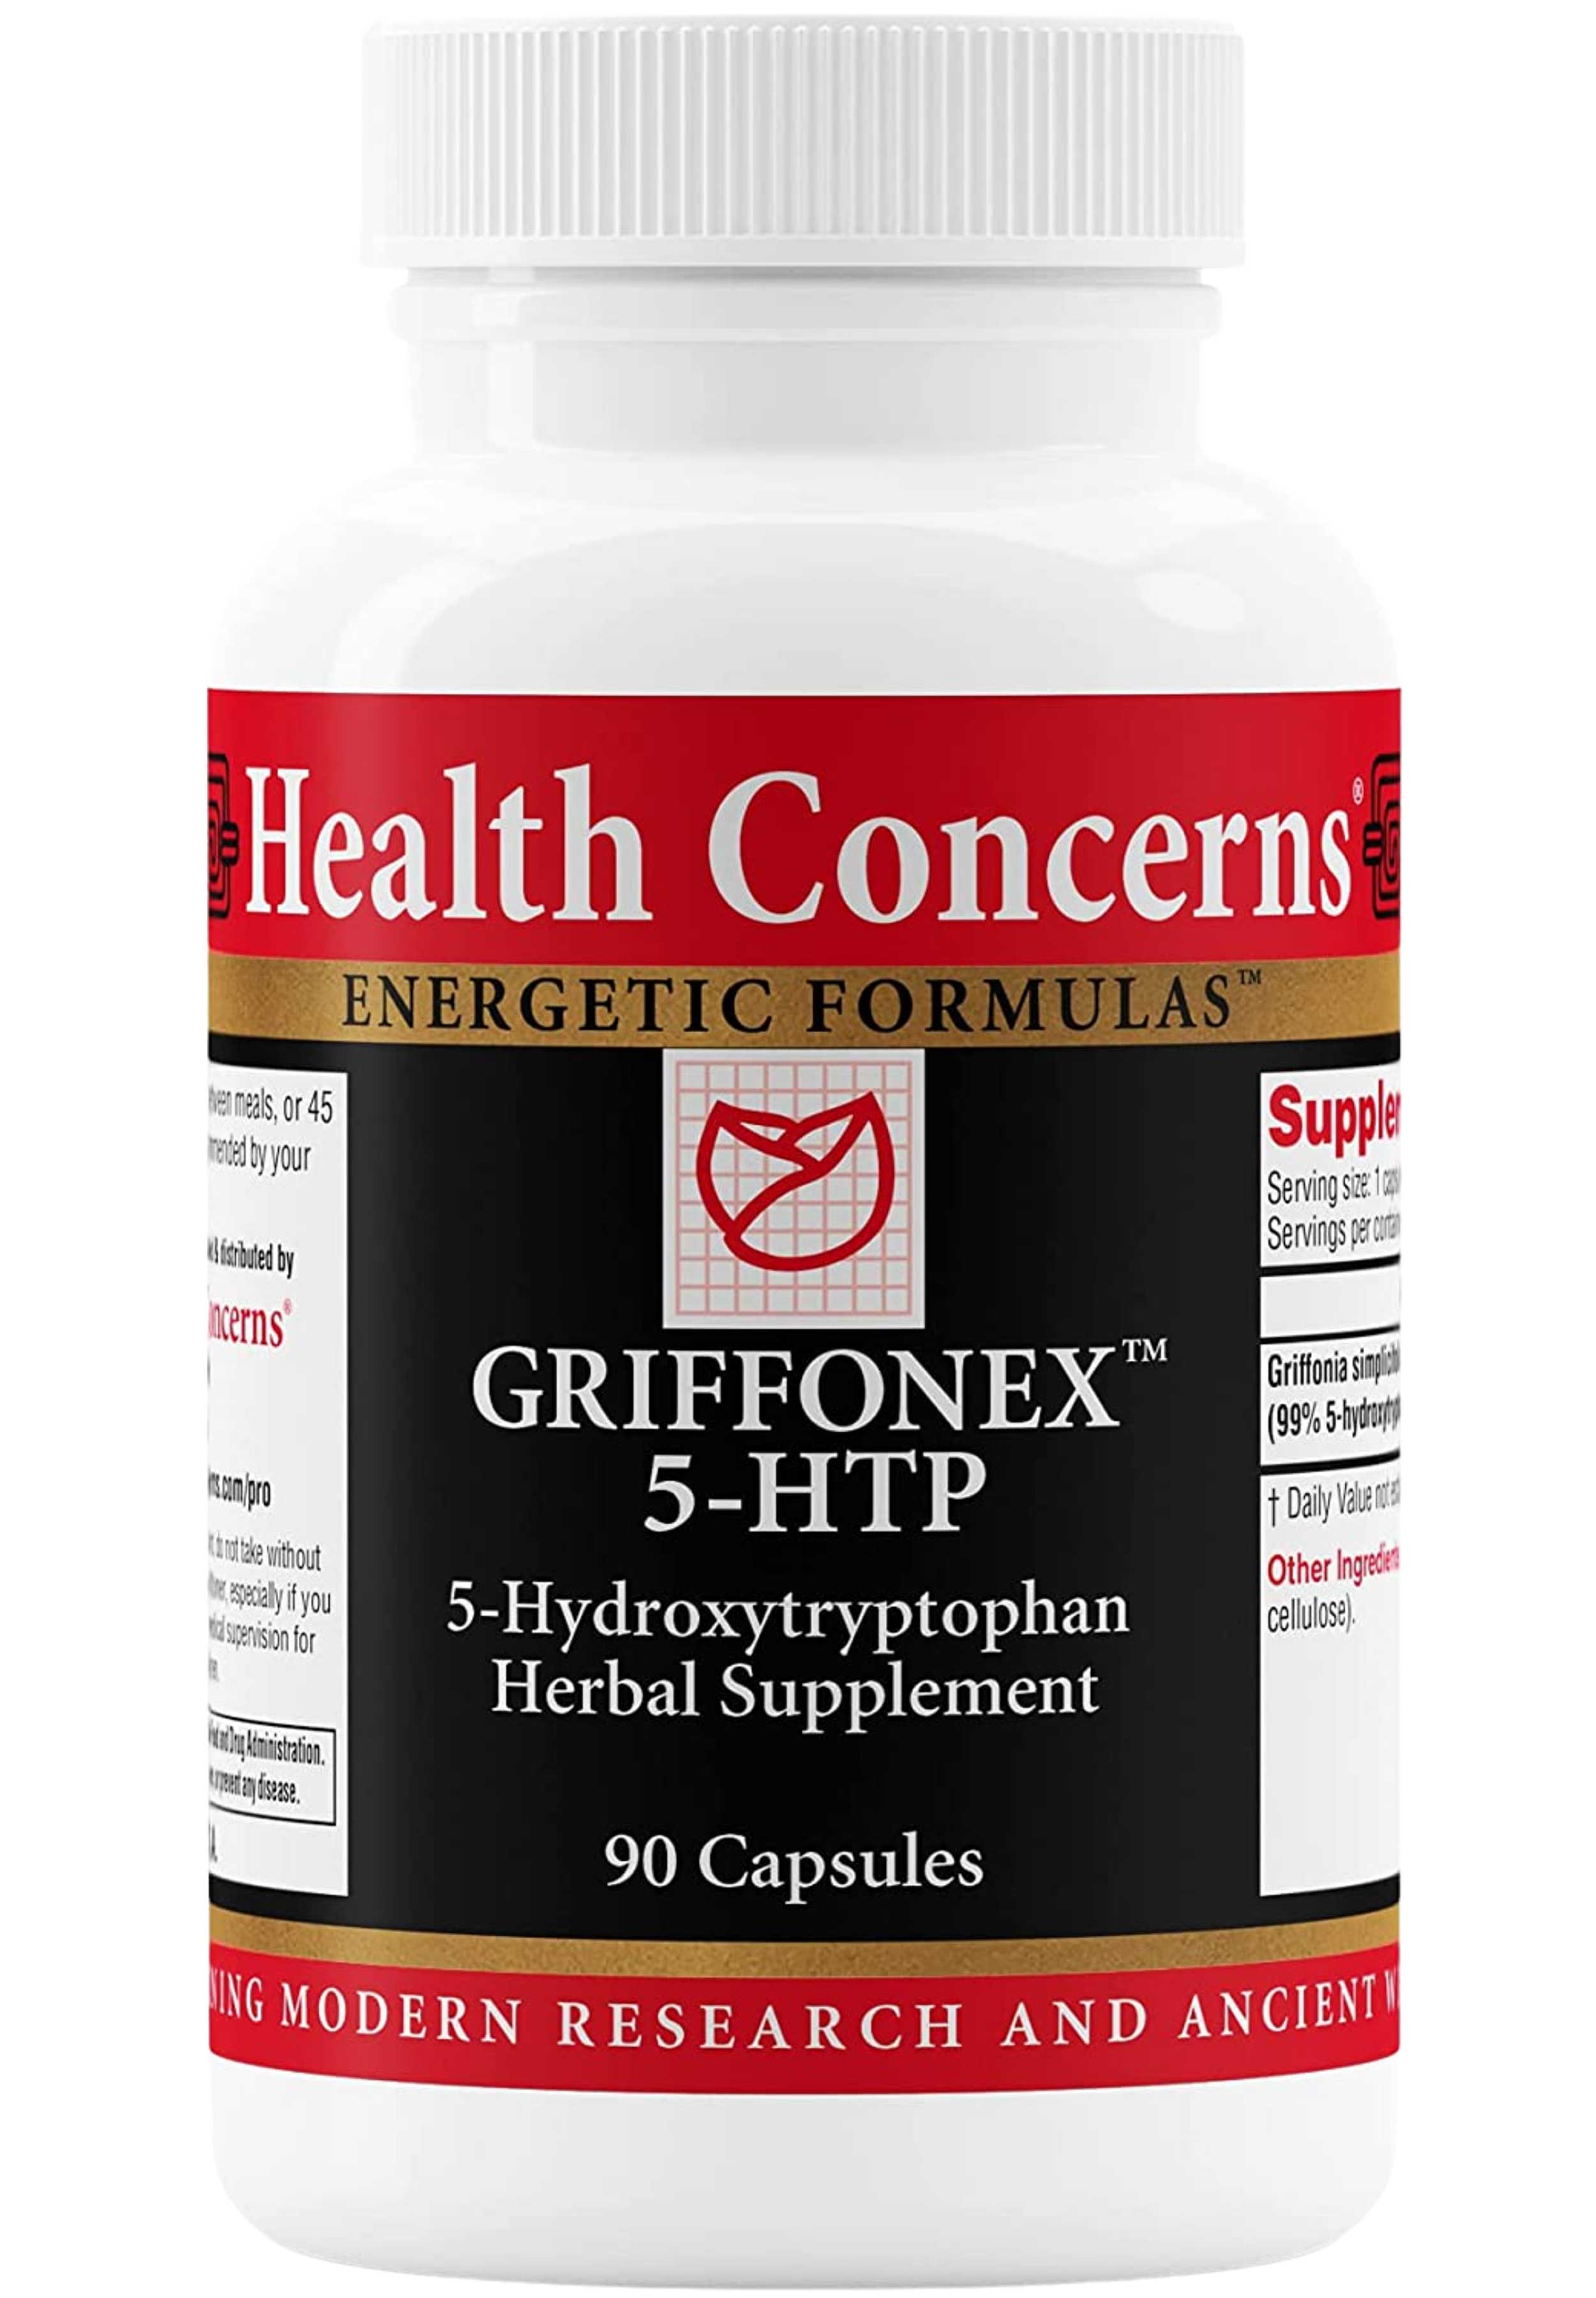 Health Concerns Griffonex 5-HTP